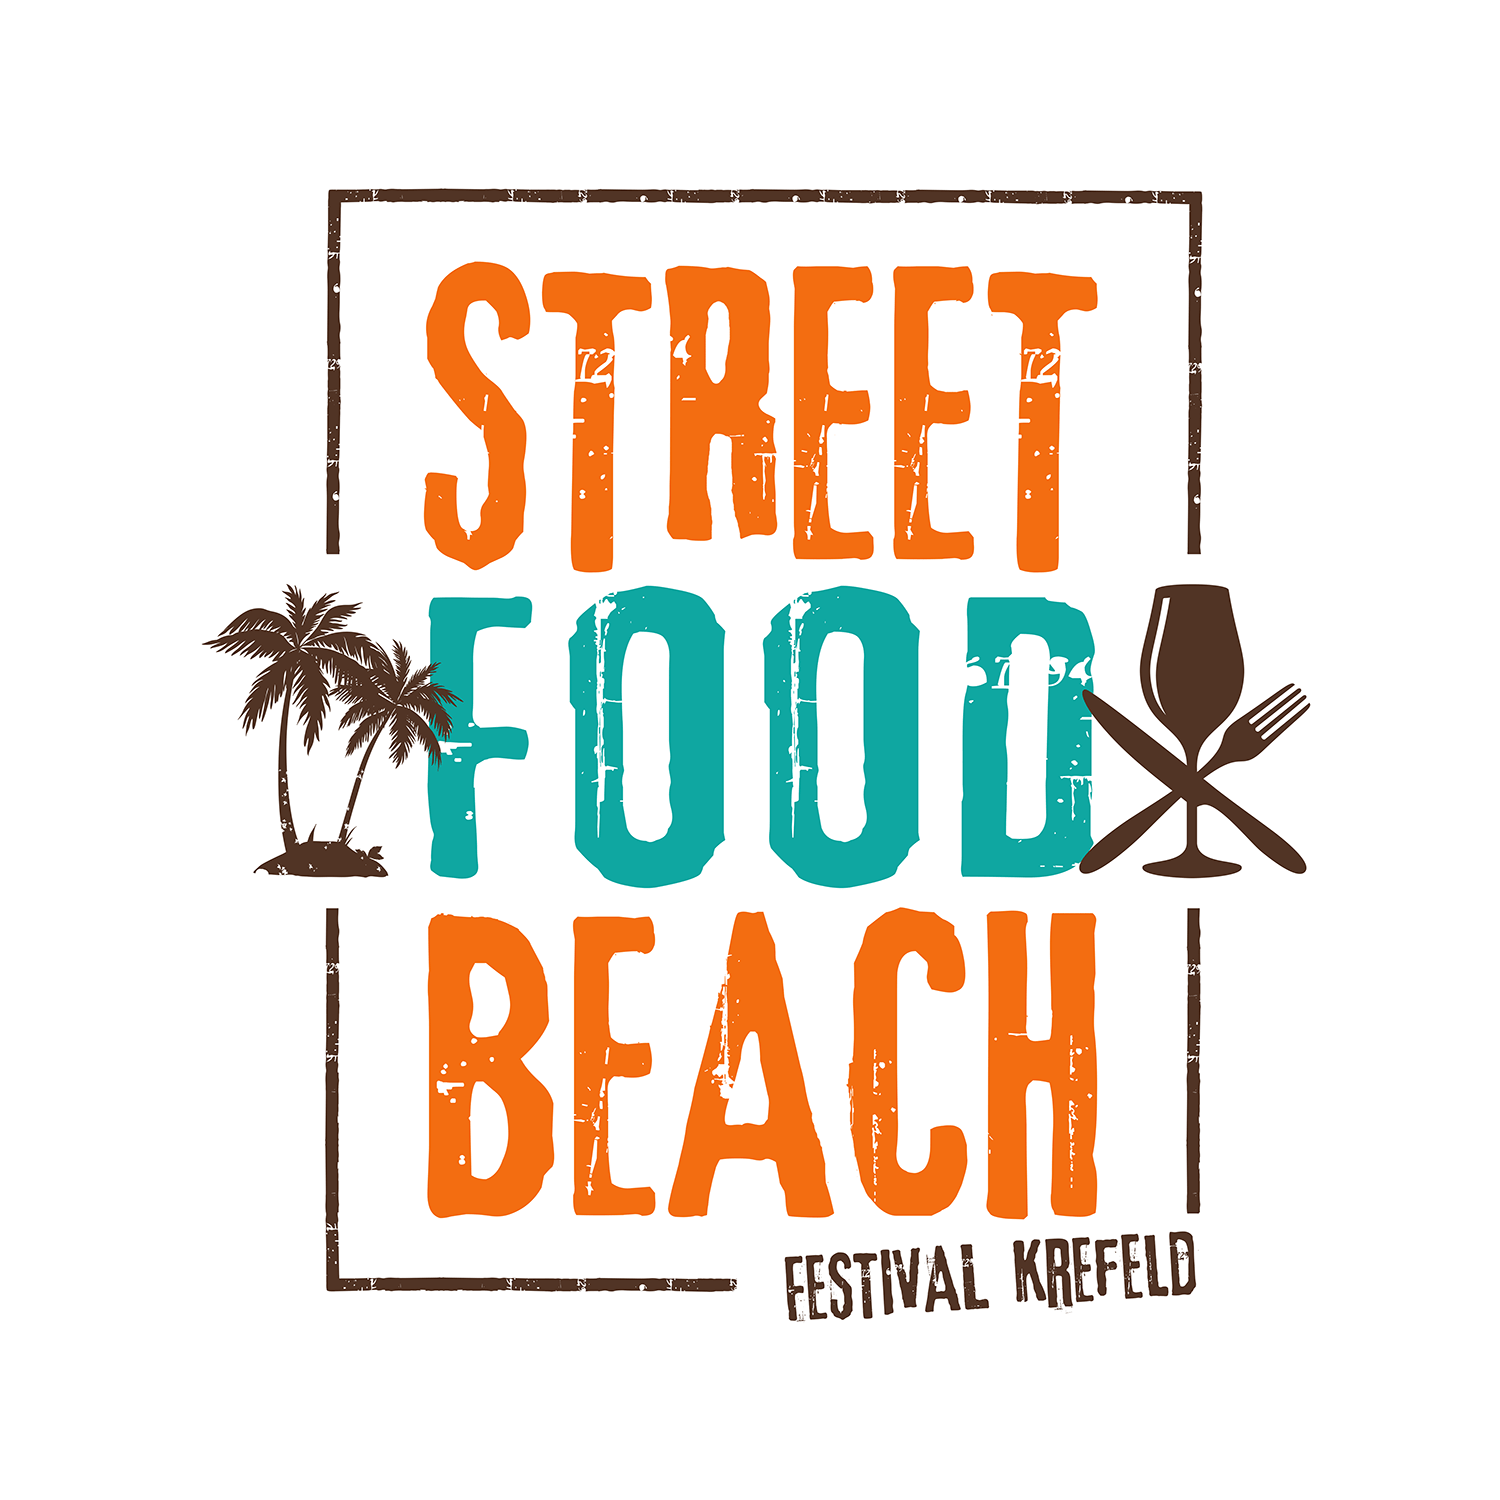 Street Food & Beach Festival Krefeld